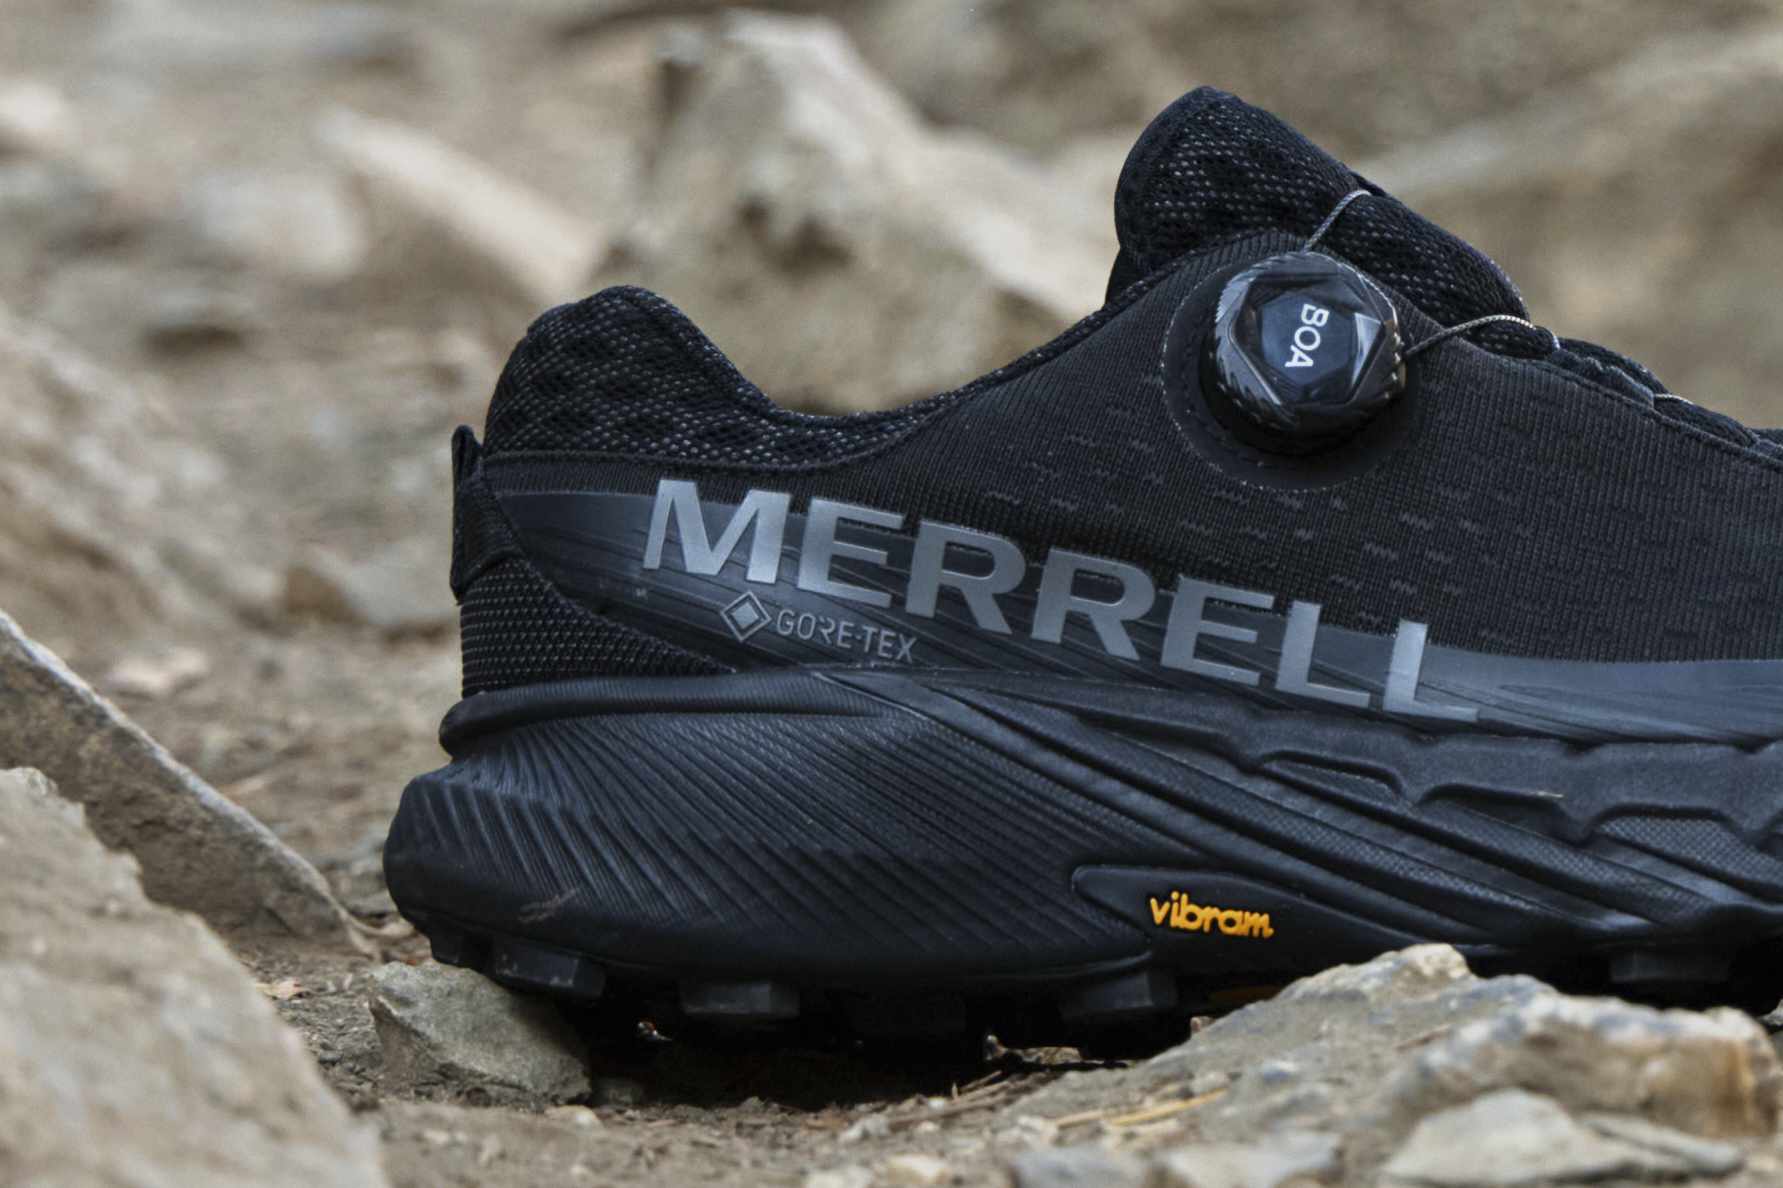 Merrell's Agility Peak 5 sneaker in black GORE-TEX with BOA laces